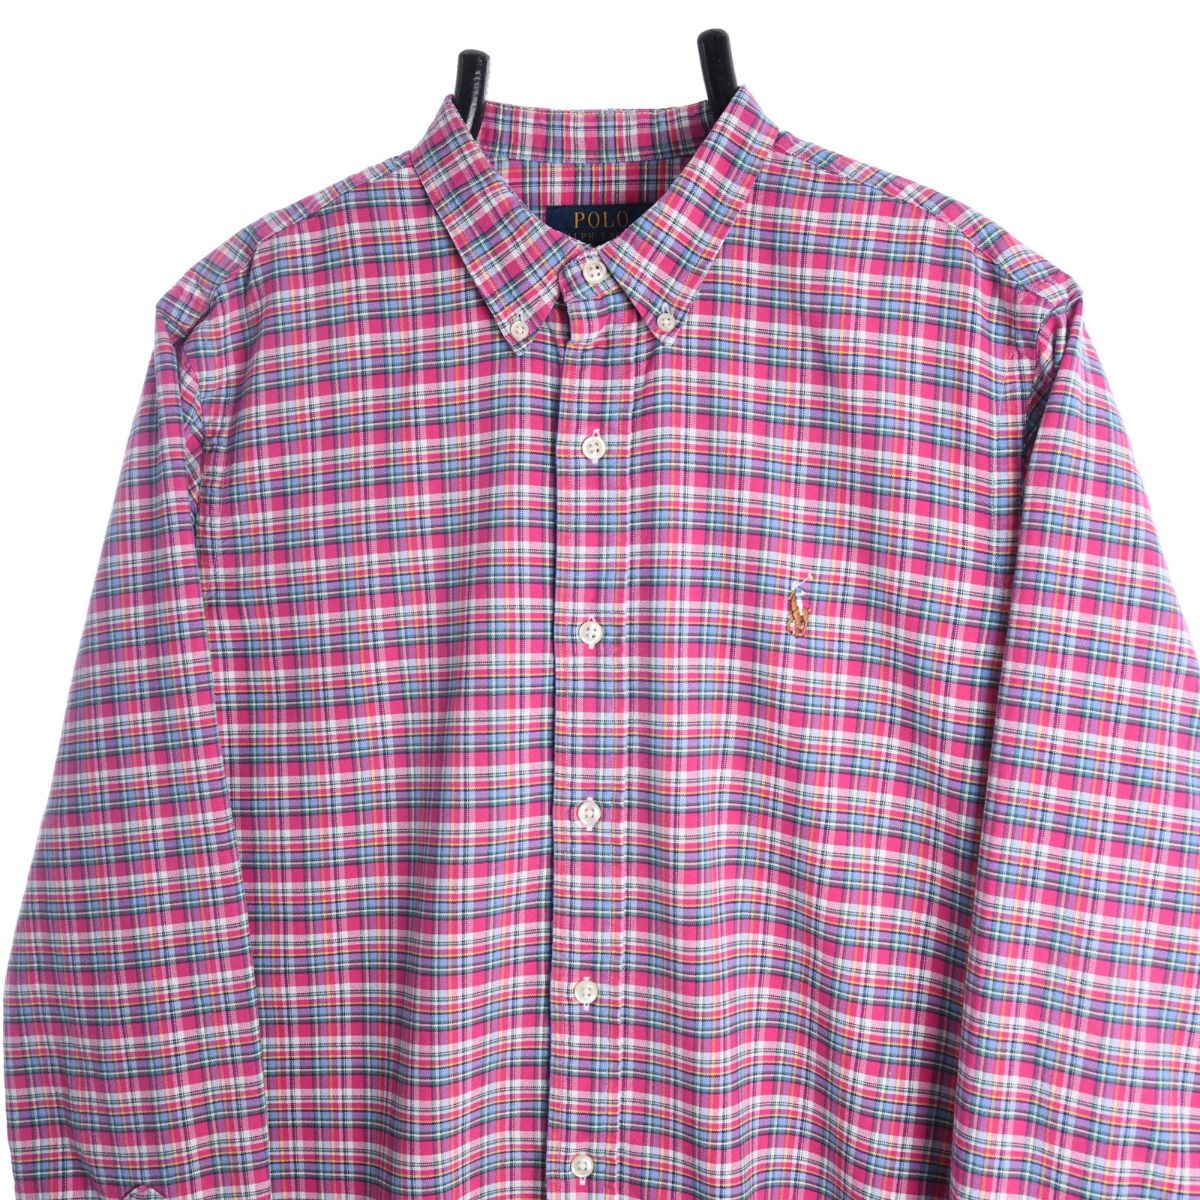 Ralph Lauren Pink and Purple Checkered Shirt